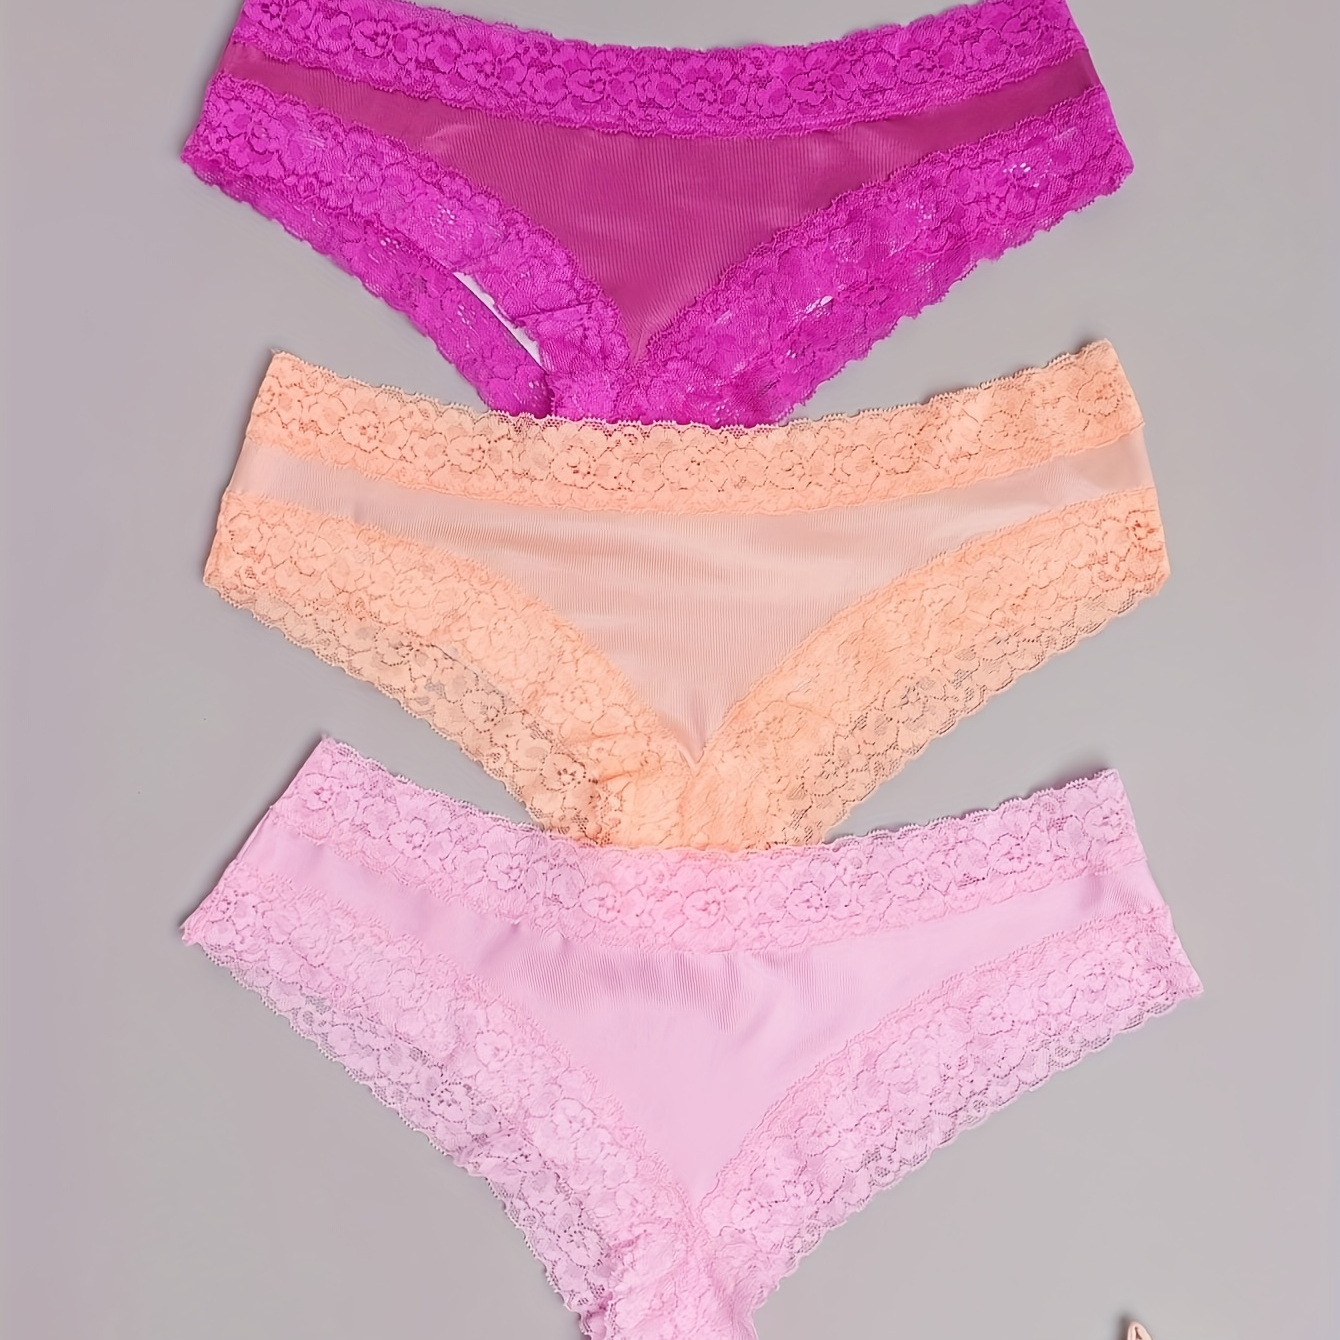  ZBORH Women's Sexy Lace Cheeky Thong Underwear Nylon